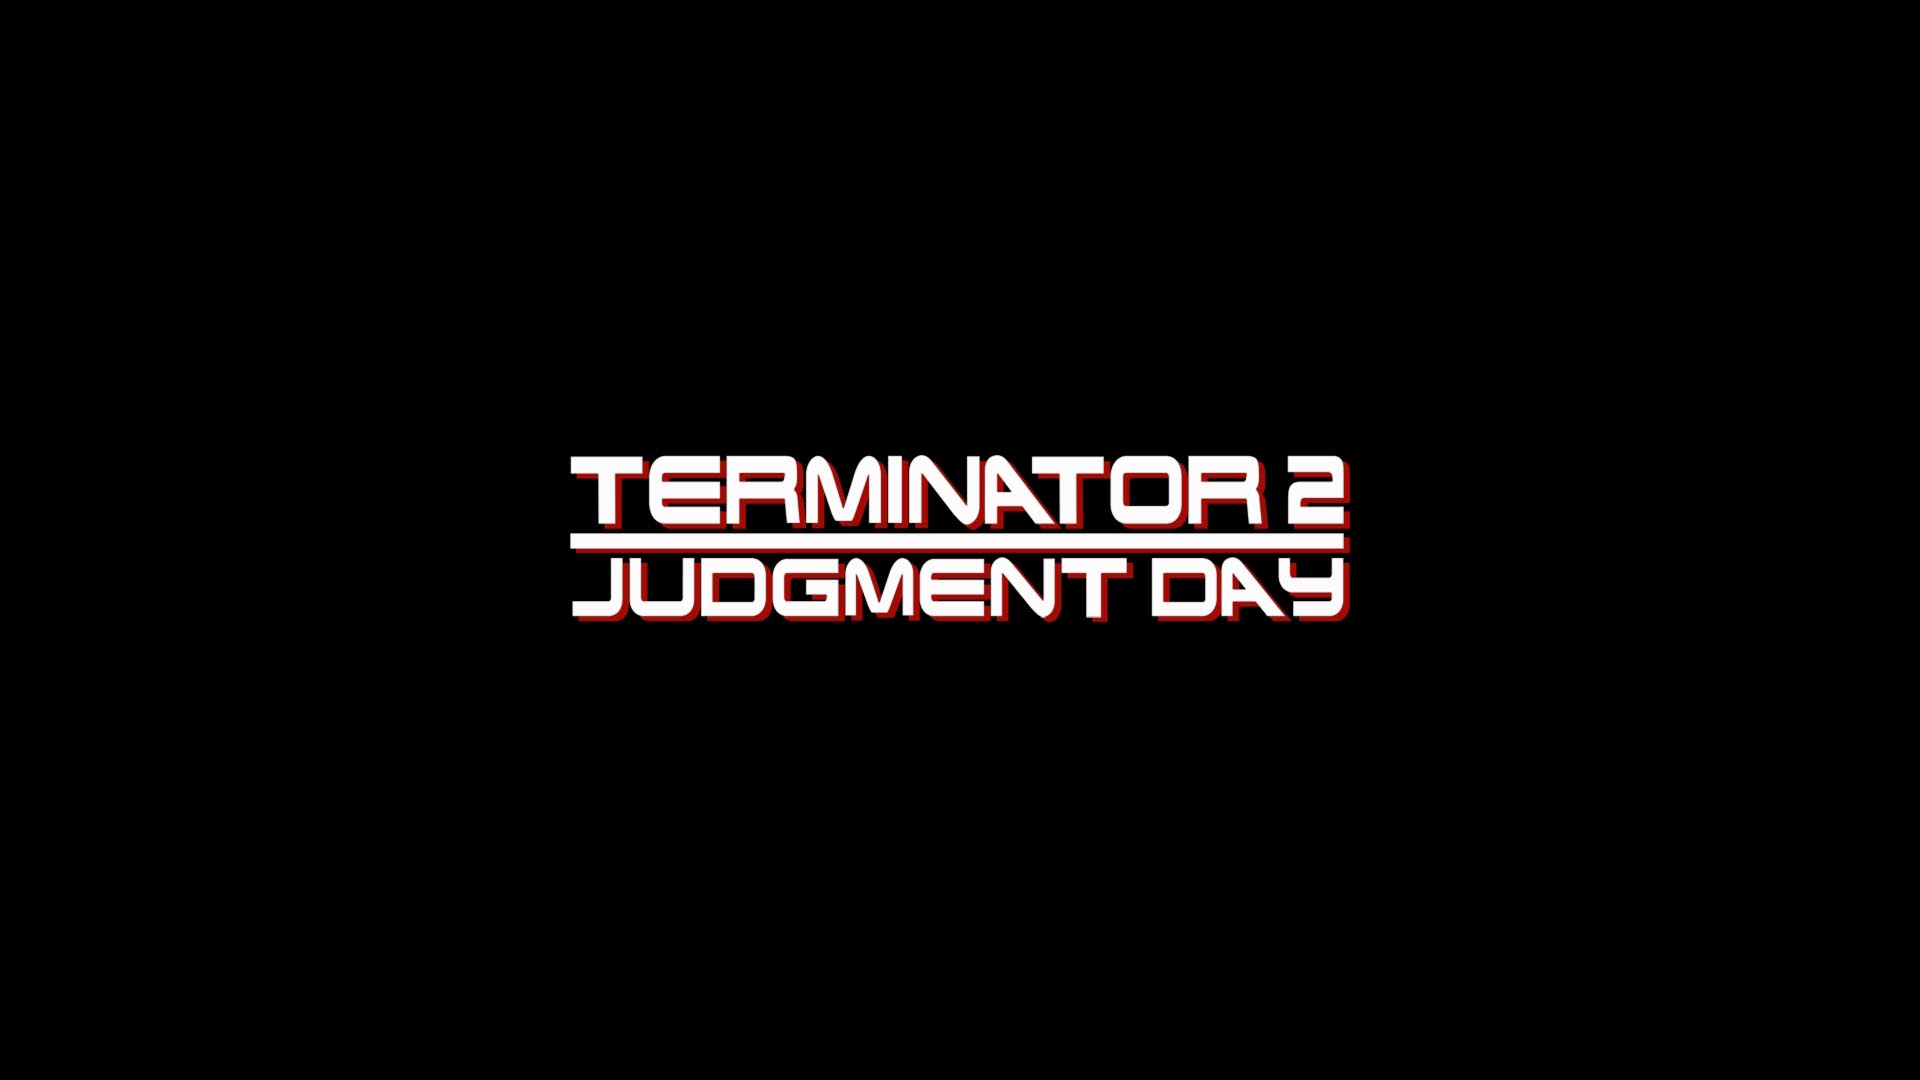 Movie Terminator 2 Judgment Day 1920x1080